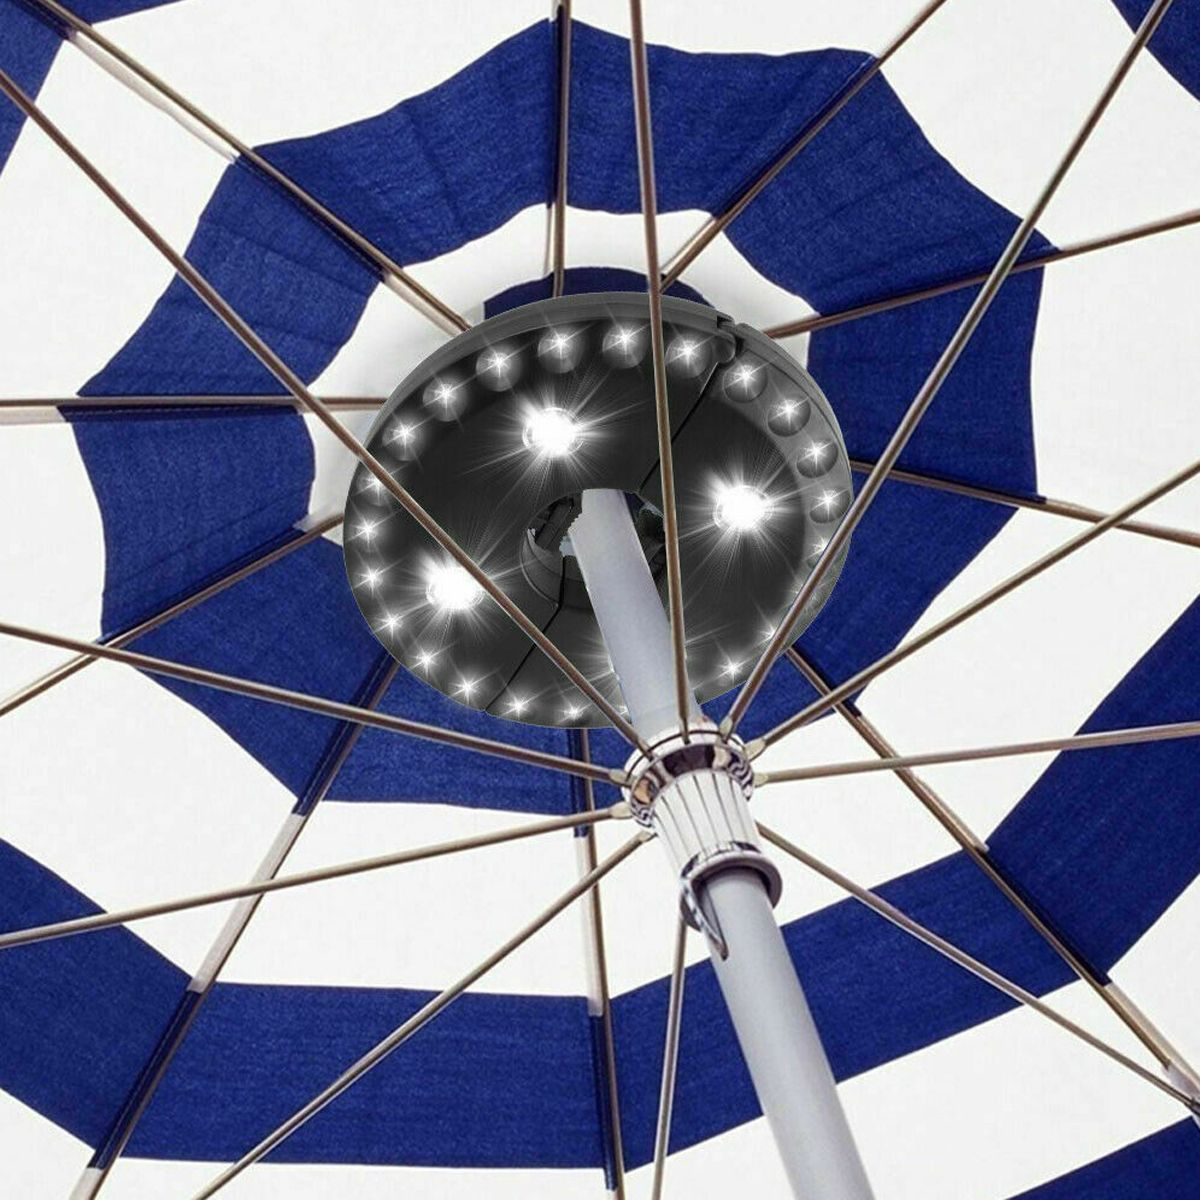 28-LED-Parasol-Patio-Umbrella-Light-3-Brightness-Mode-Outdoor-Camping-Tent-Light-1692106